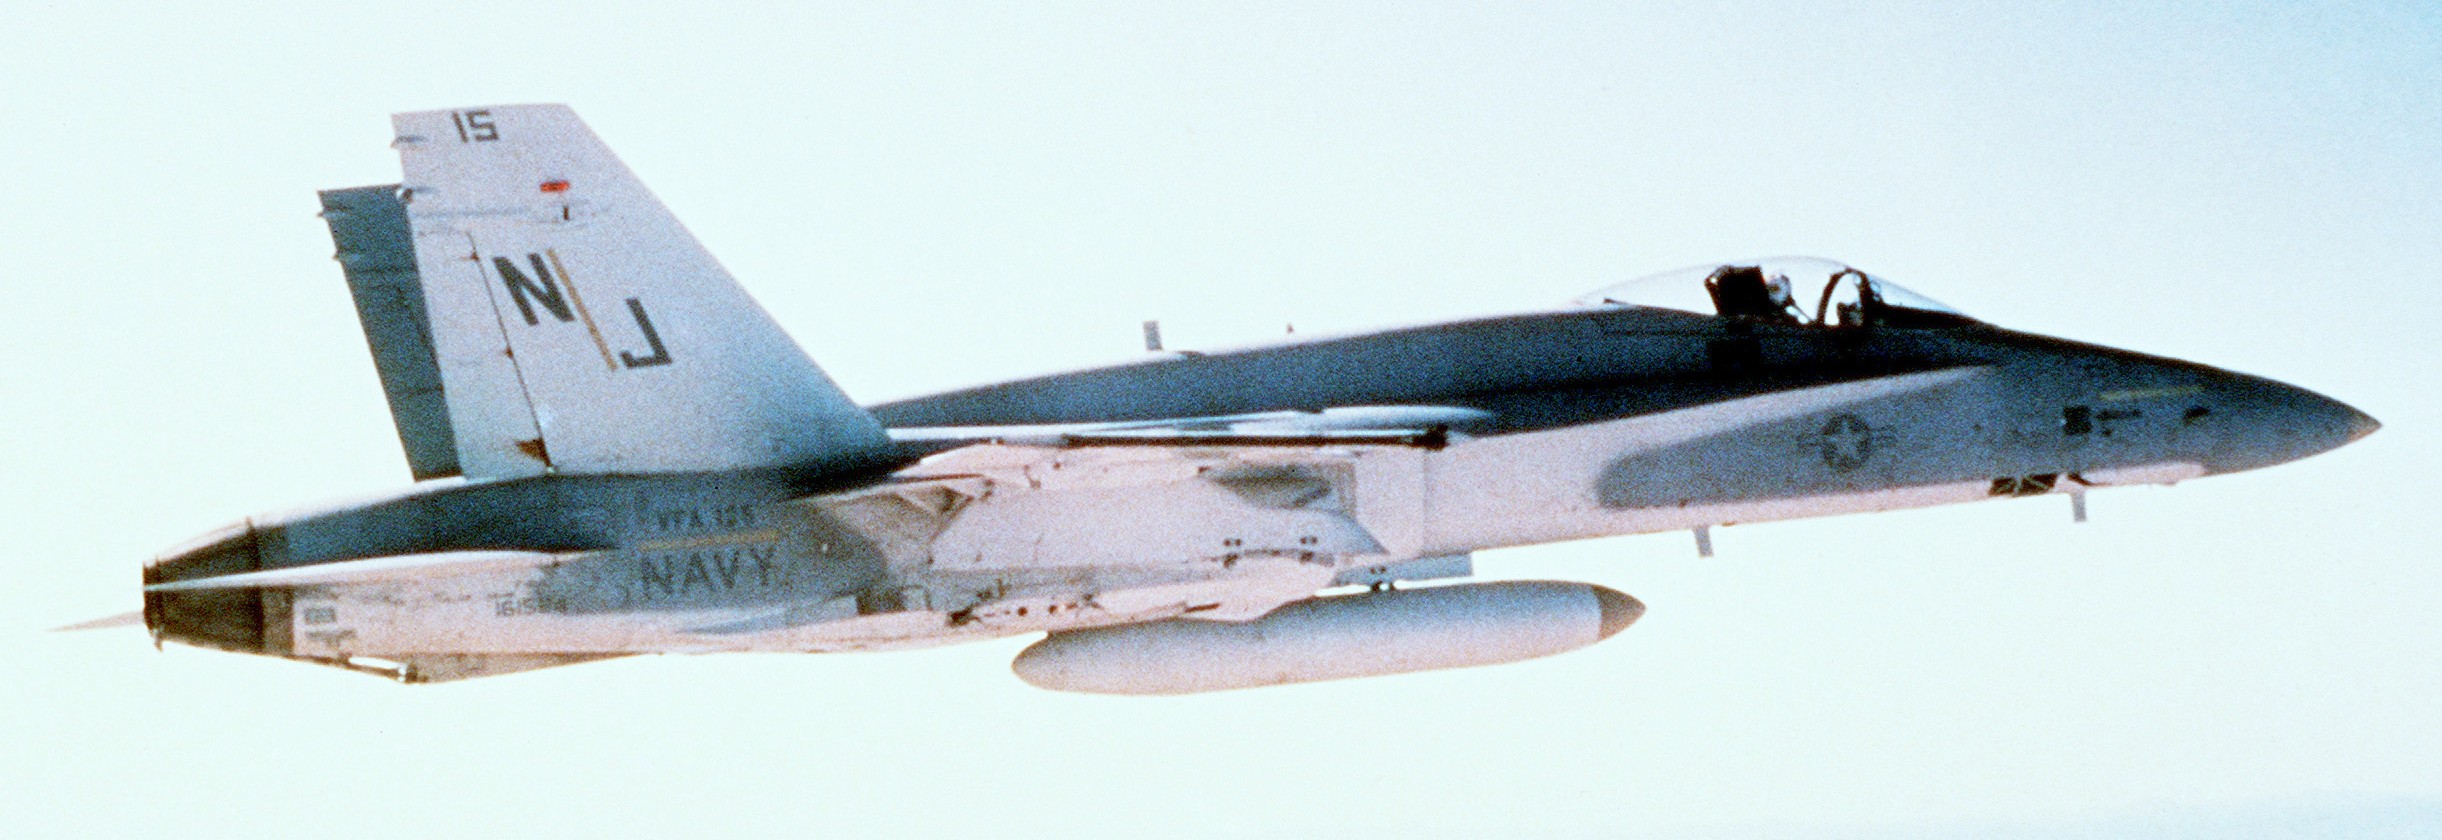 vfa-125 rough raiders strike fighter squadron f/a-18a hornet 1984 46